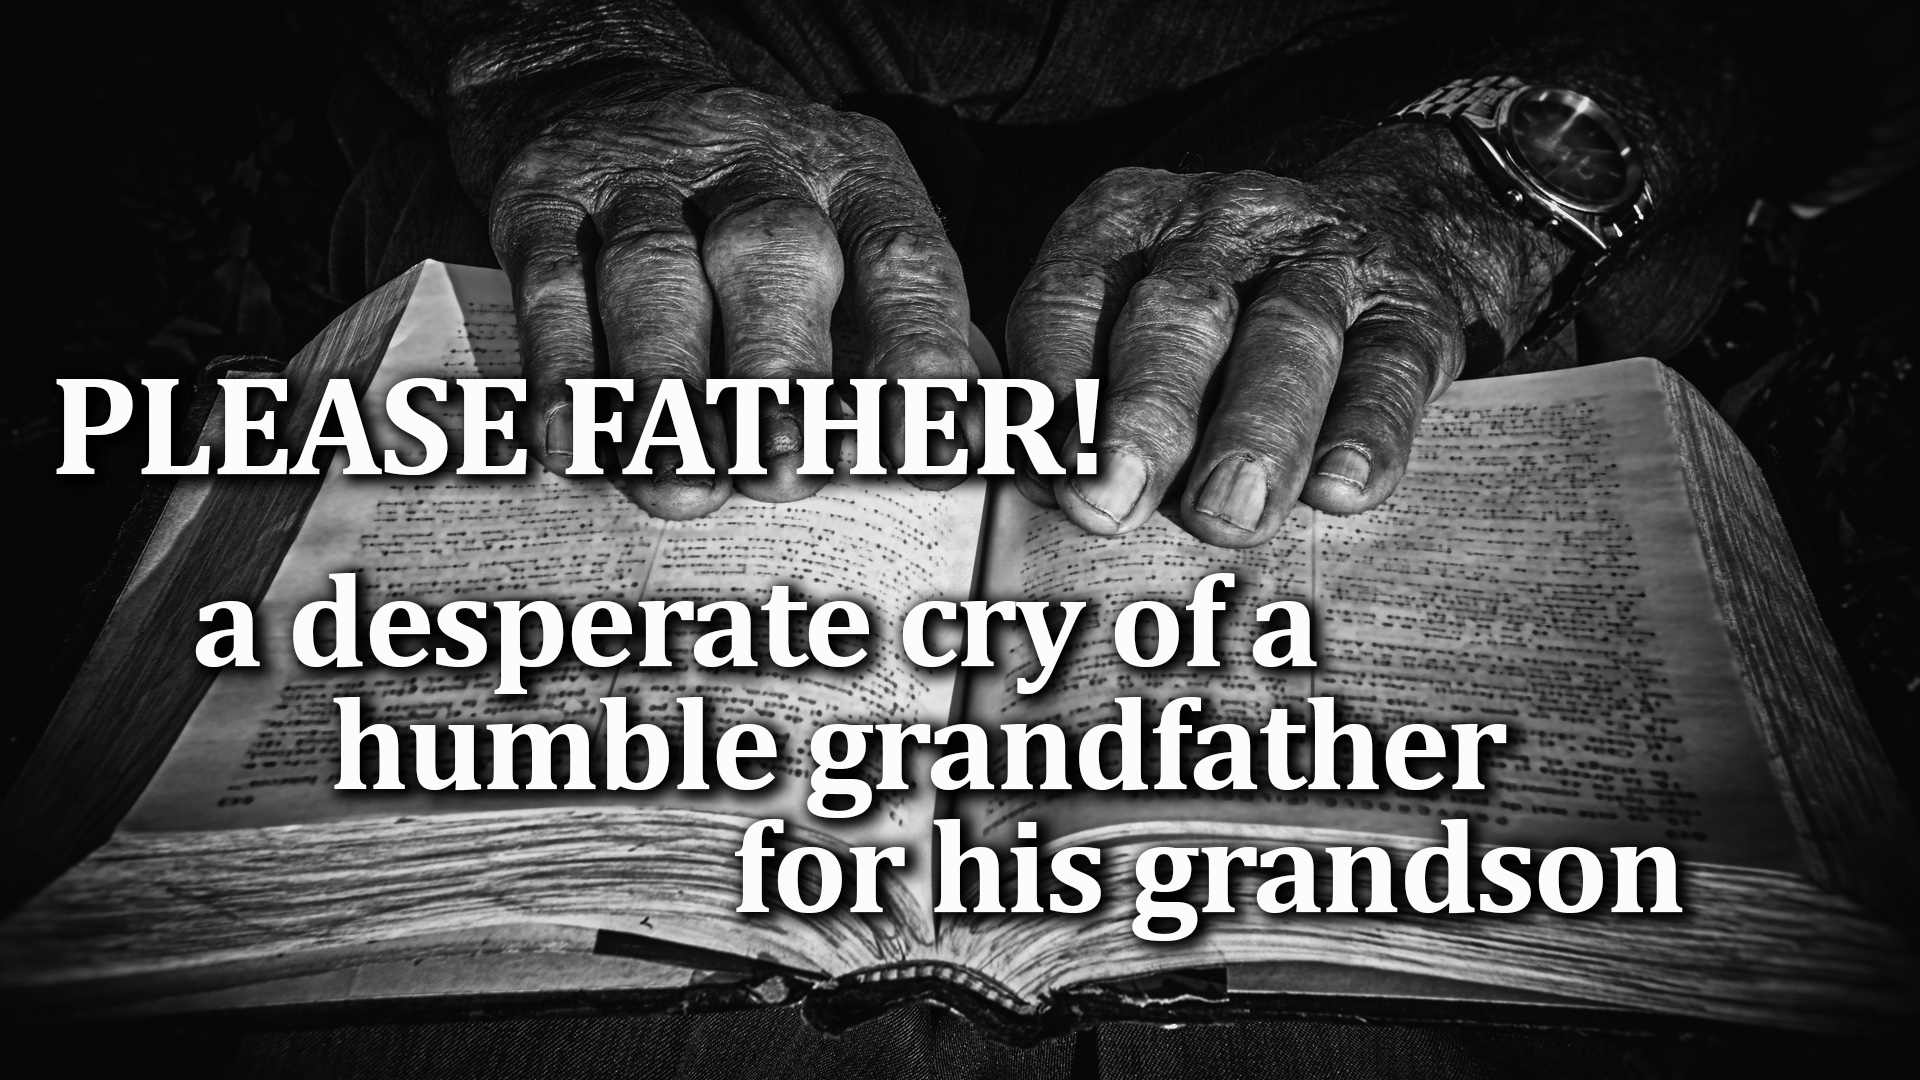 11-23-21 please father desperate cry grandfather for grandson